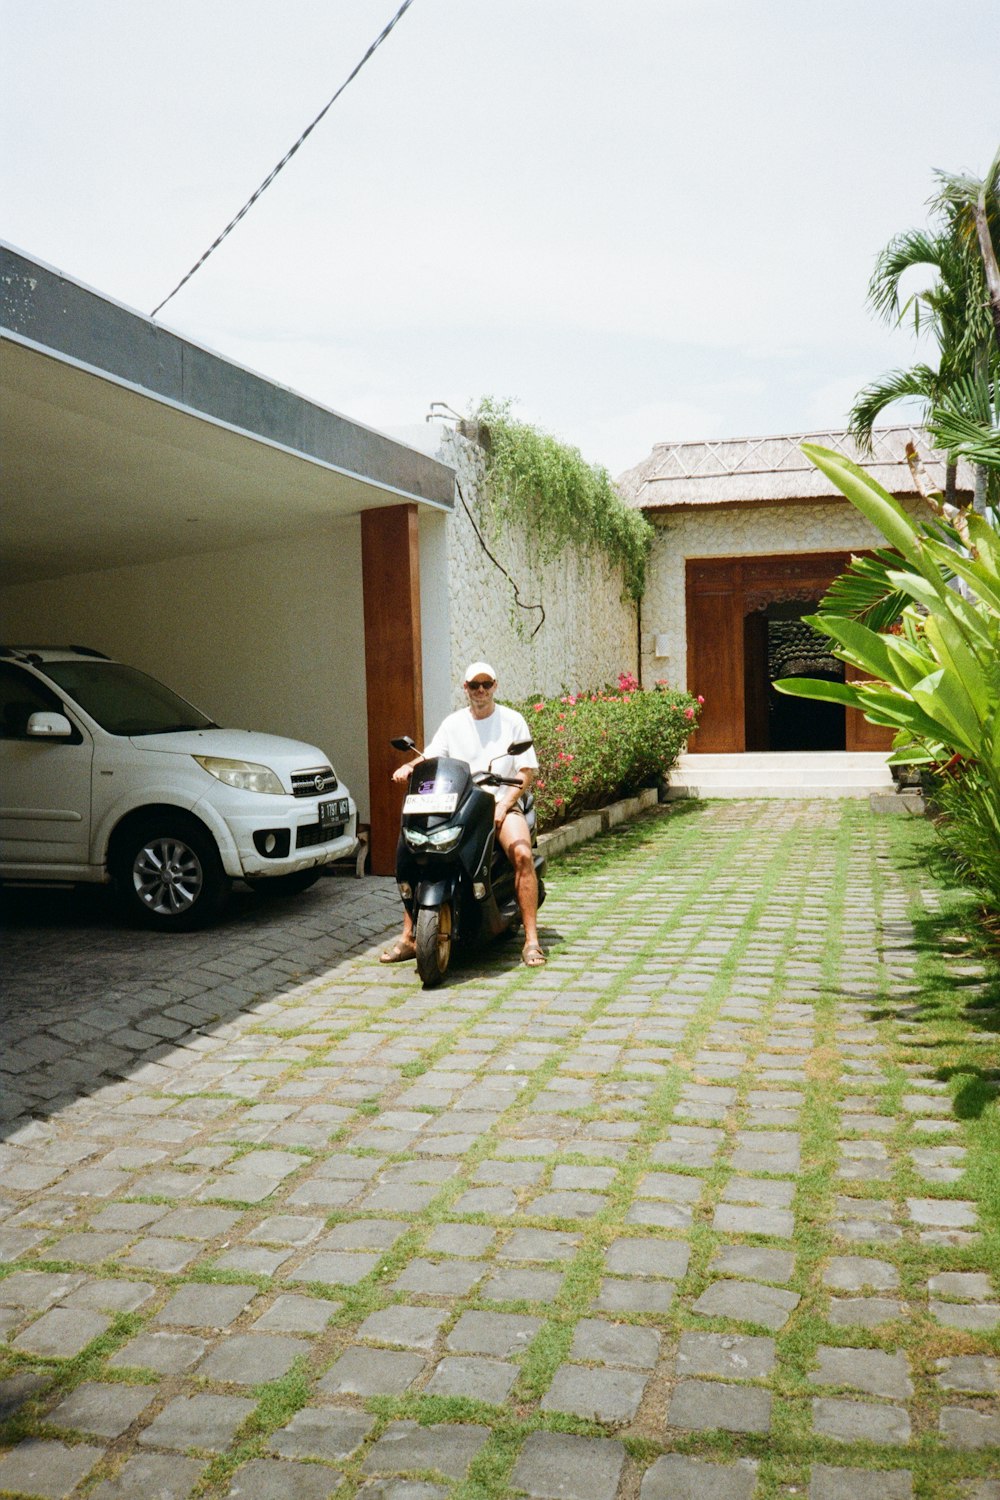 a man riding a scooter next to a white car